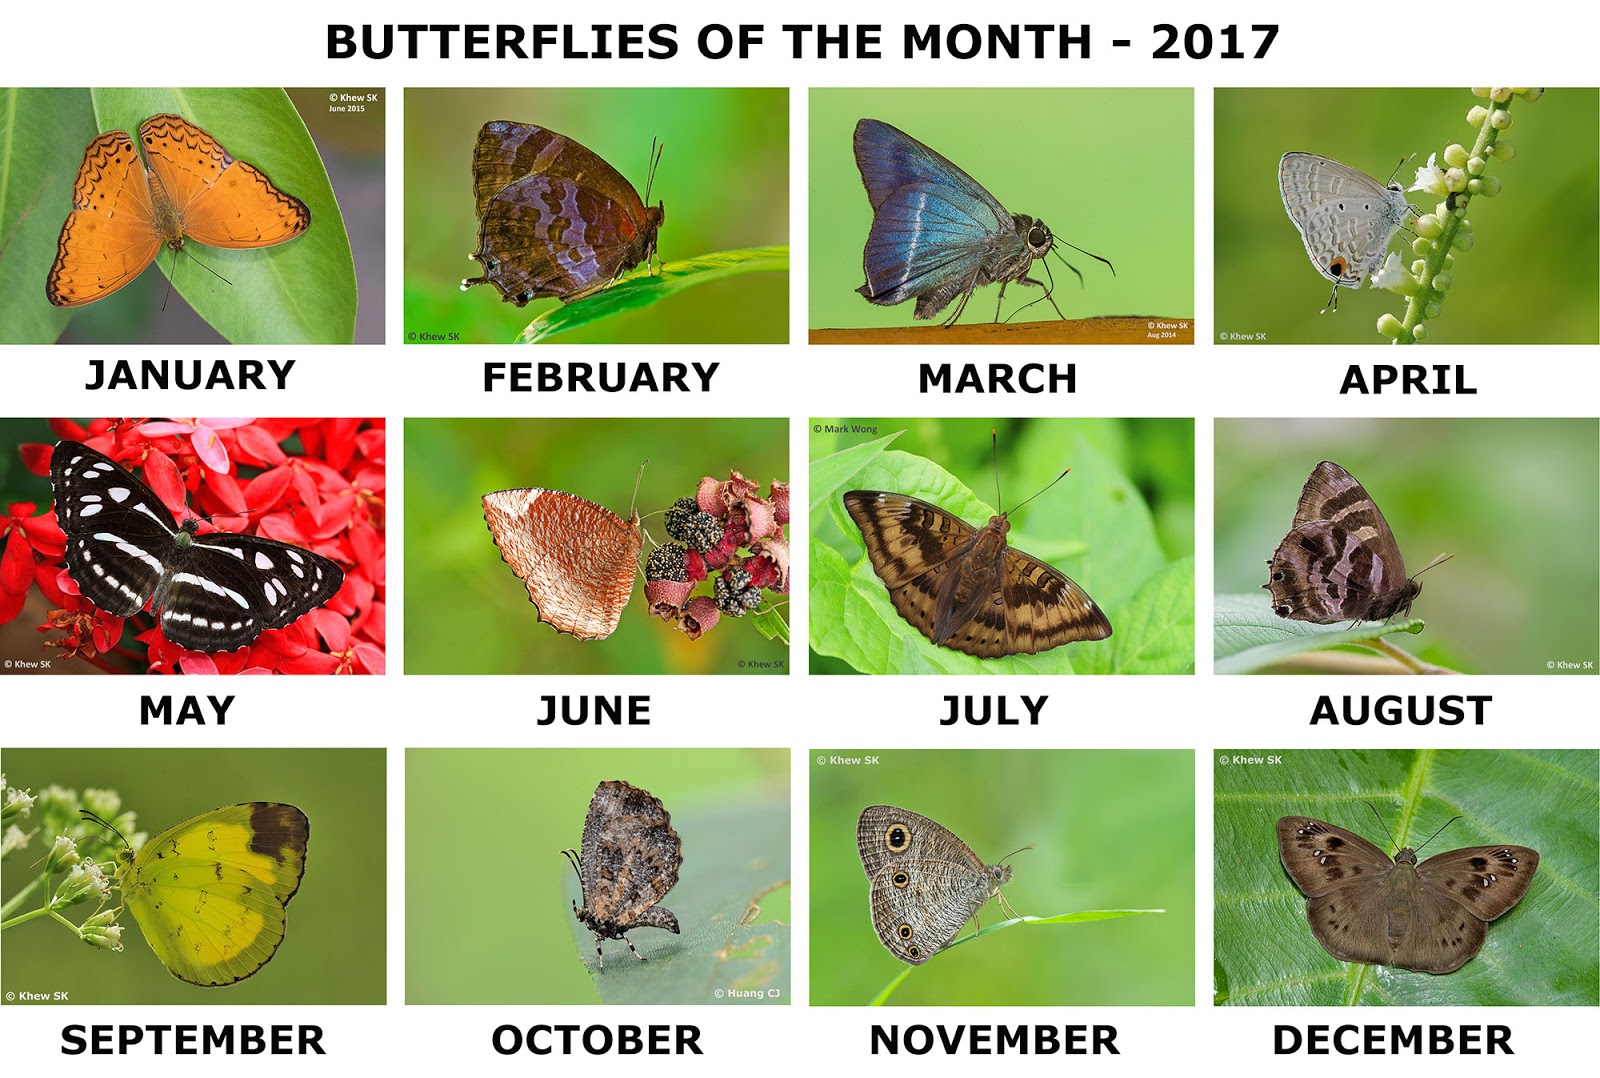 Butterflies of Singapore: 2017 - Looking Back